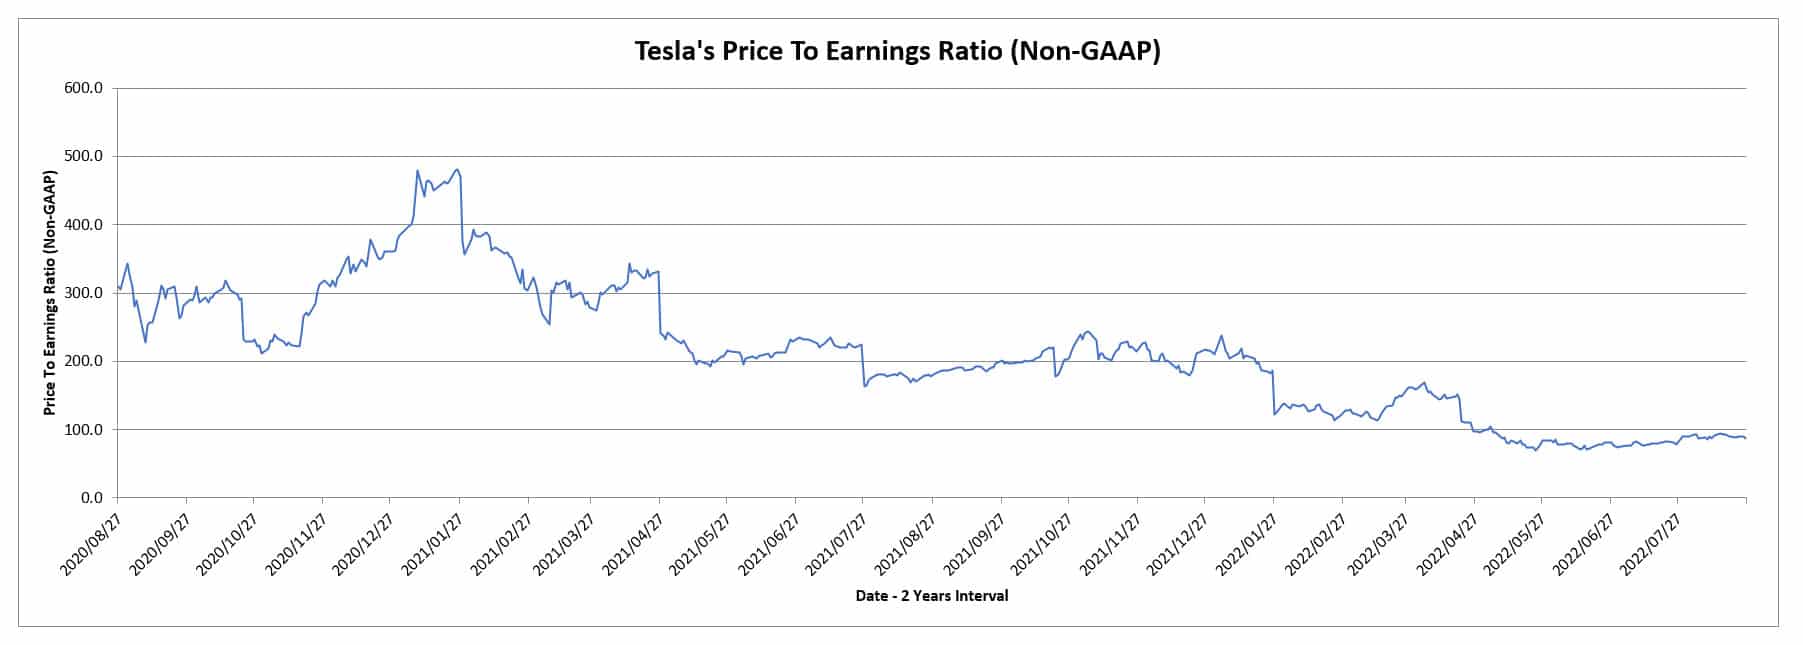 Tesla's price to earnings ratio (non-GAAP)